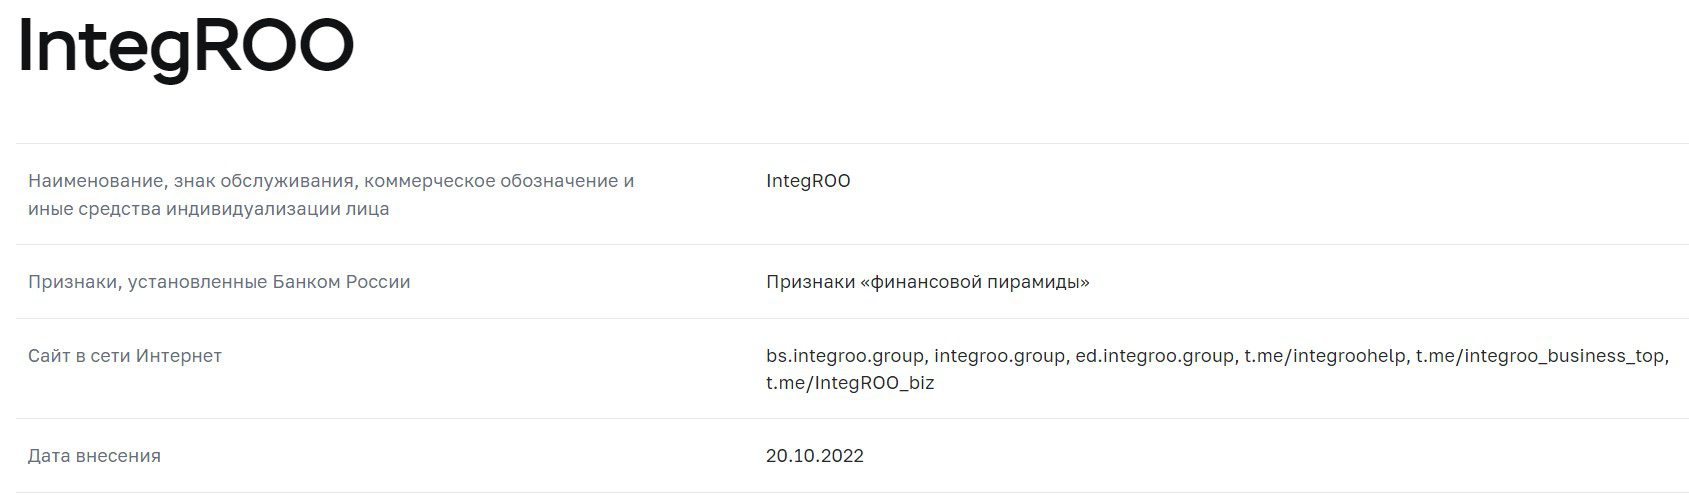 Проверка сайта https://integroo.group/
